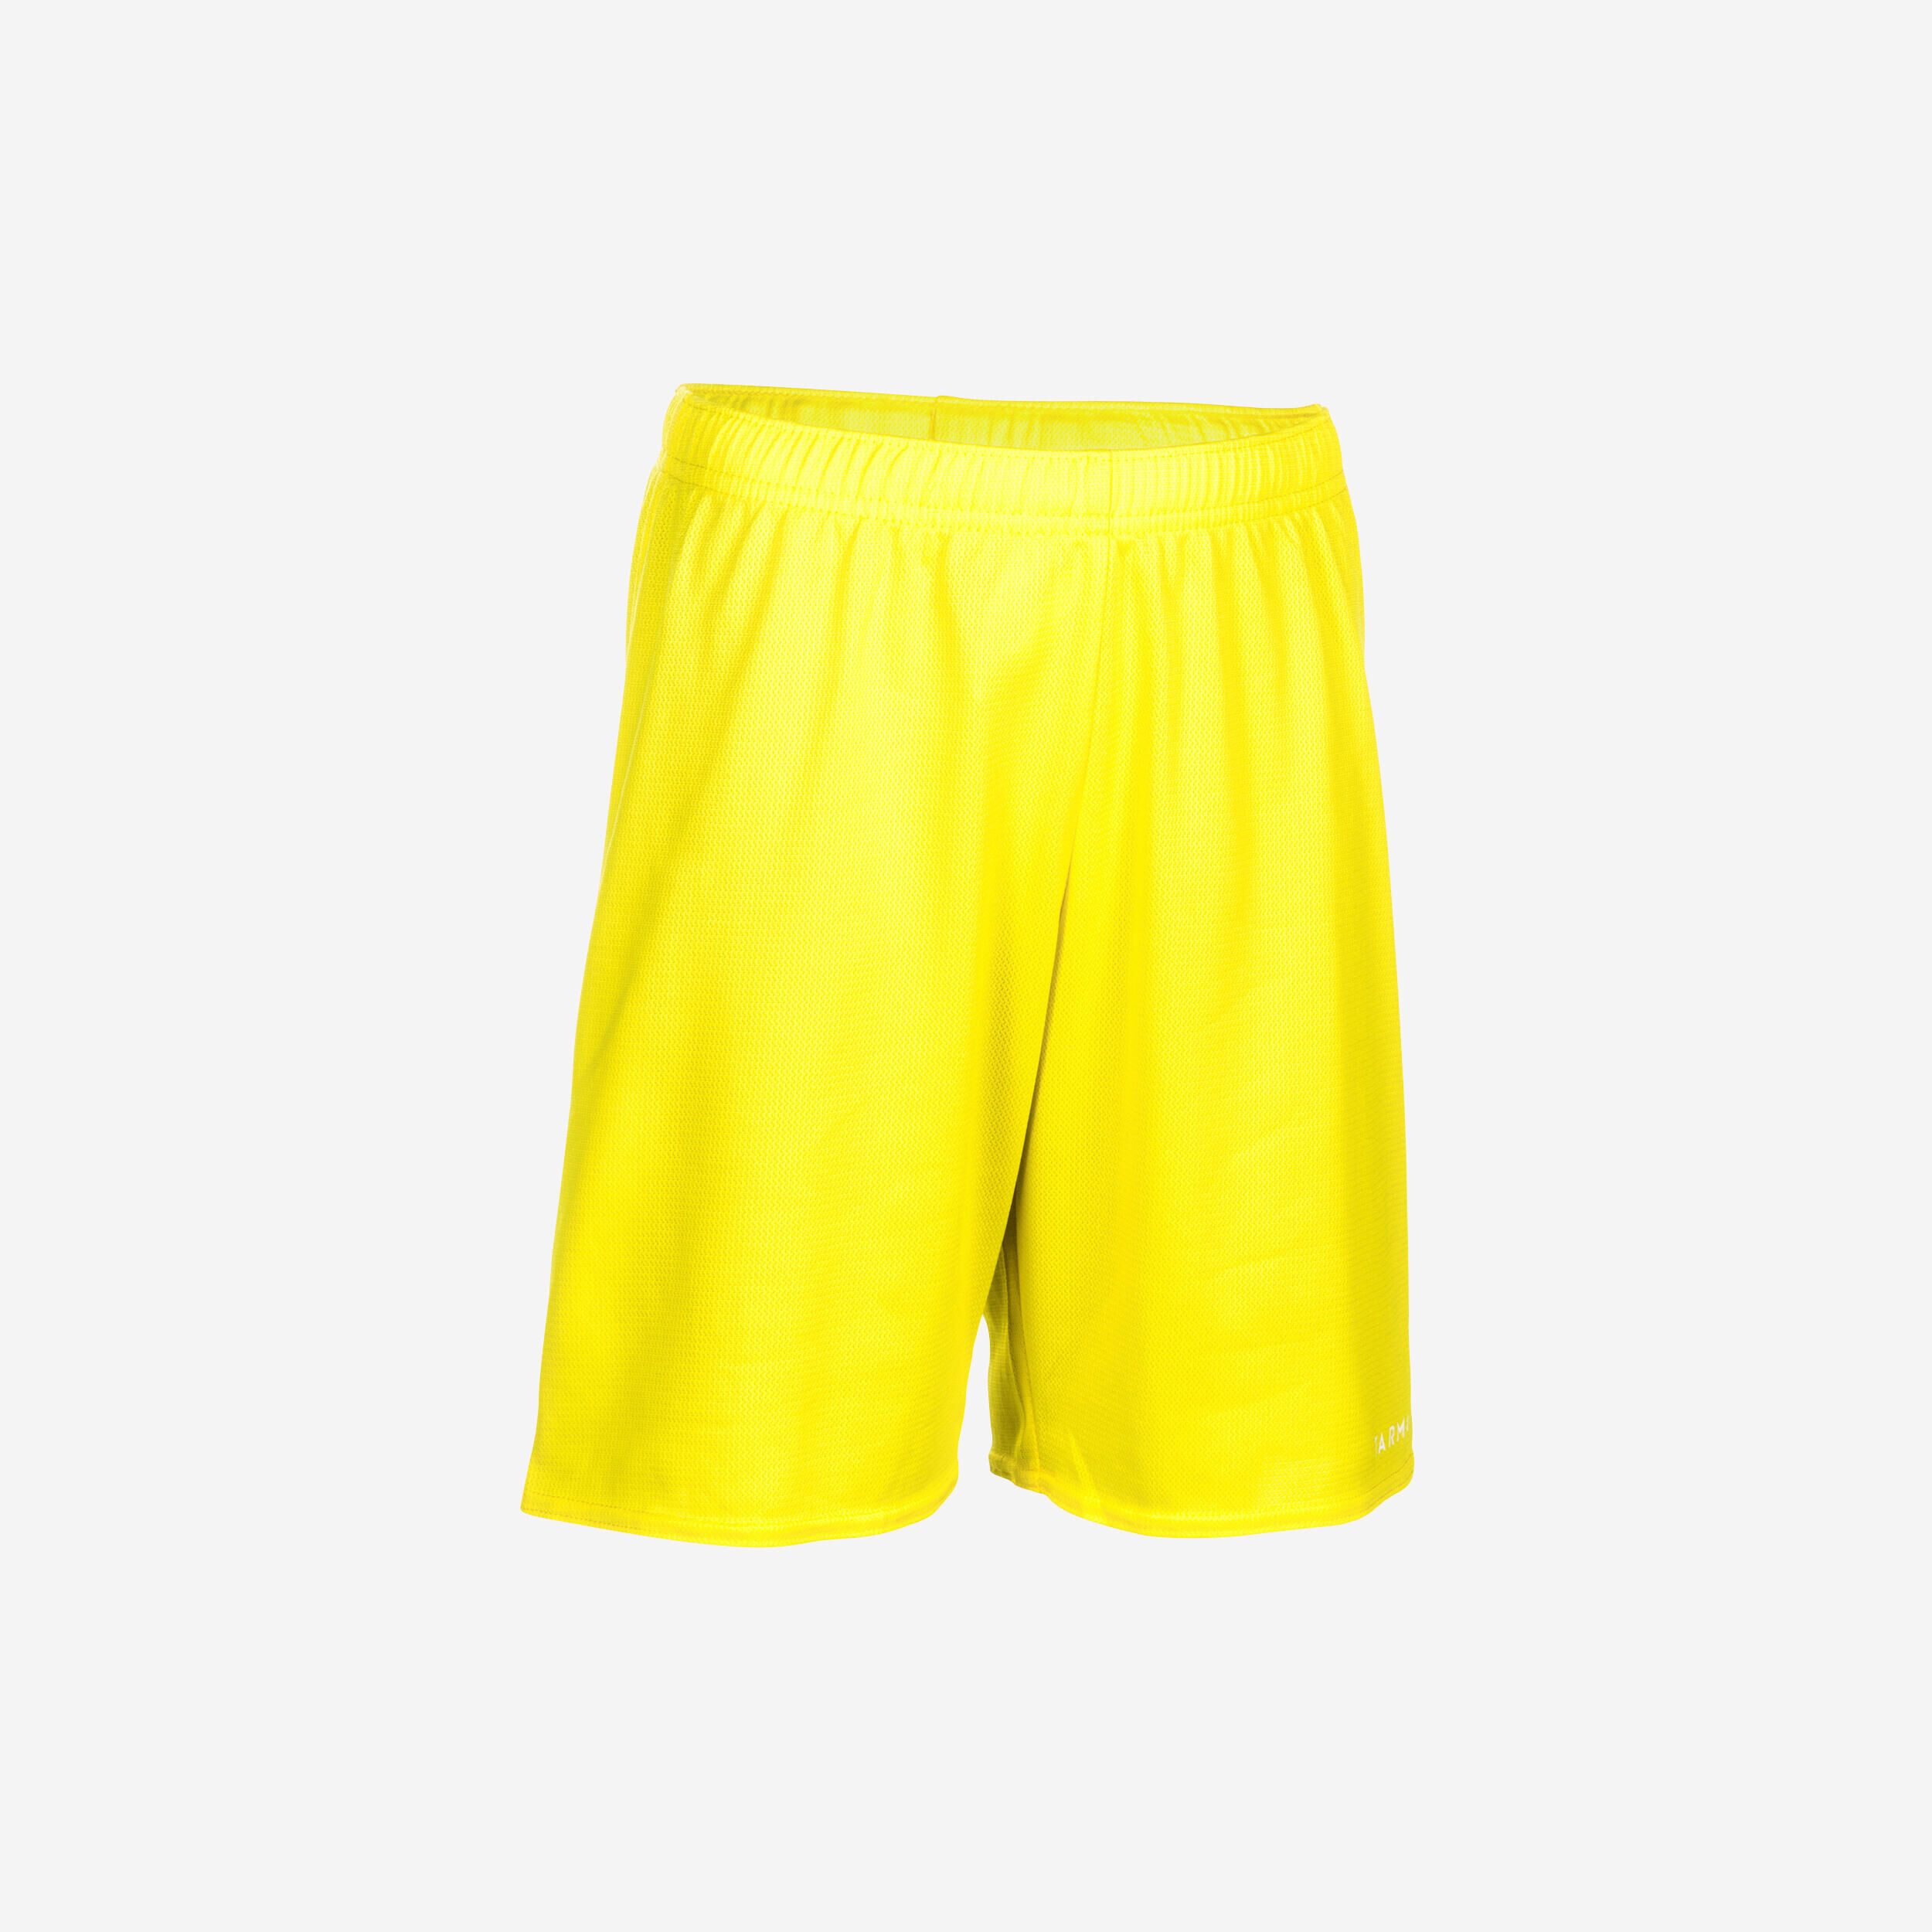 TARMAK SH100 Boys'/Girls' Beginner Basketball Shorts - Yellow